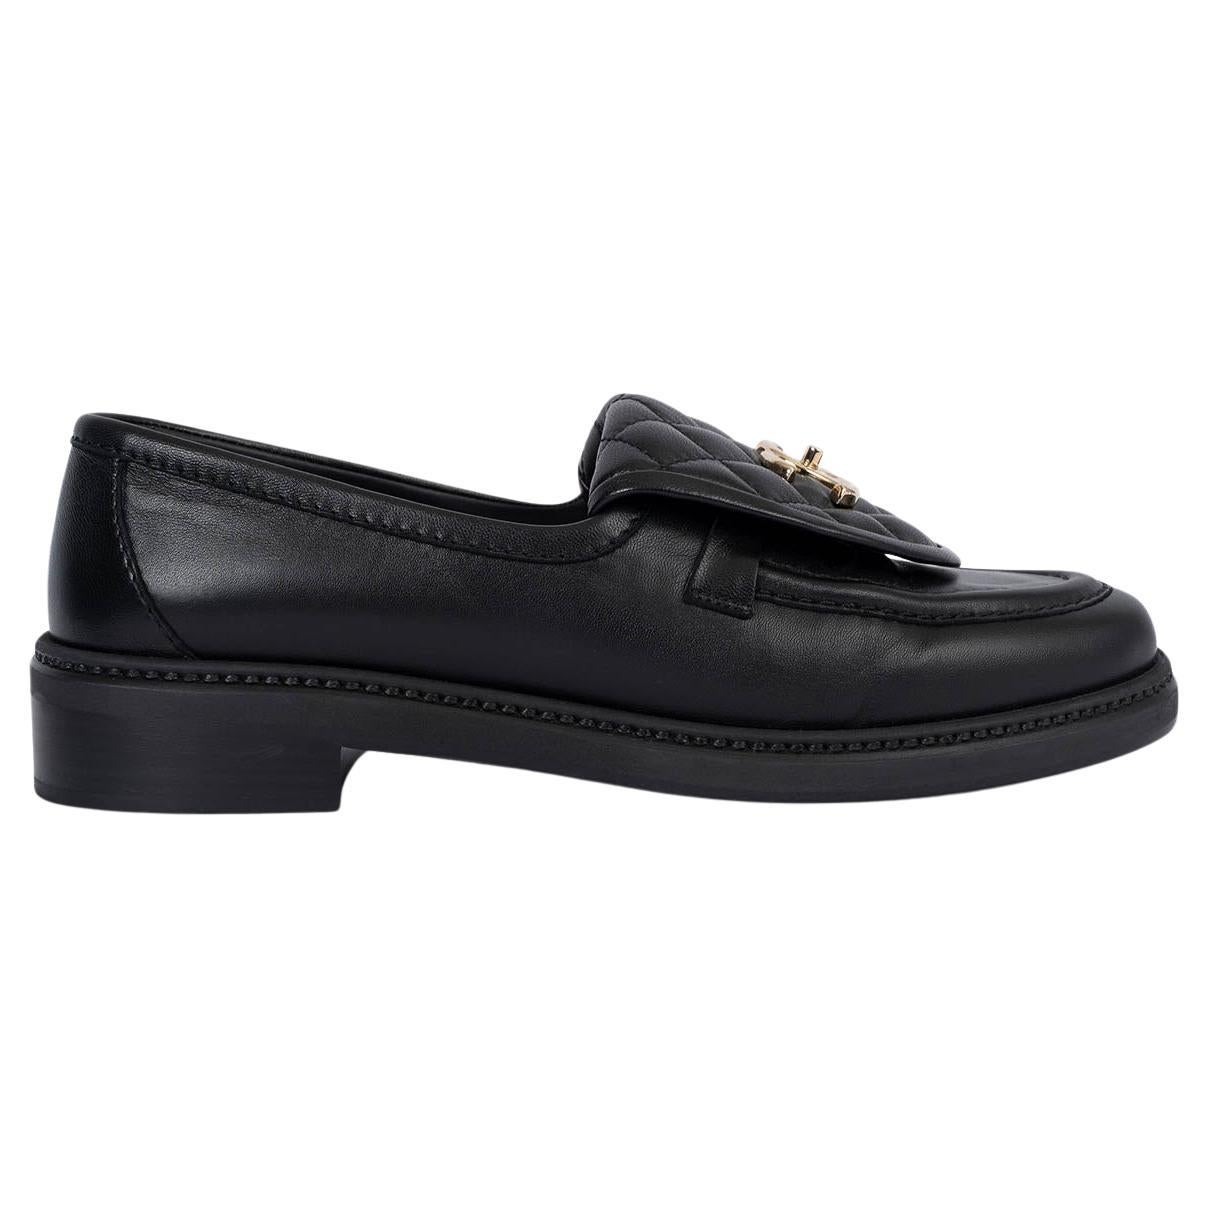 CHANEL cuir noir REV TURNLOCK Mocassins Chaussures 39 en vente